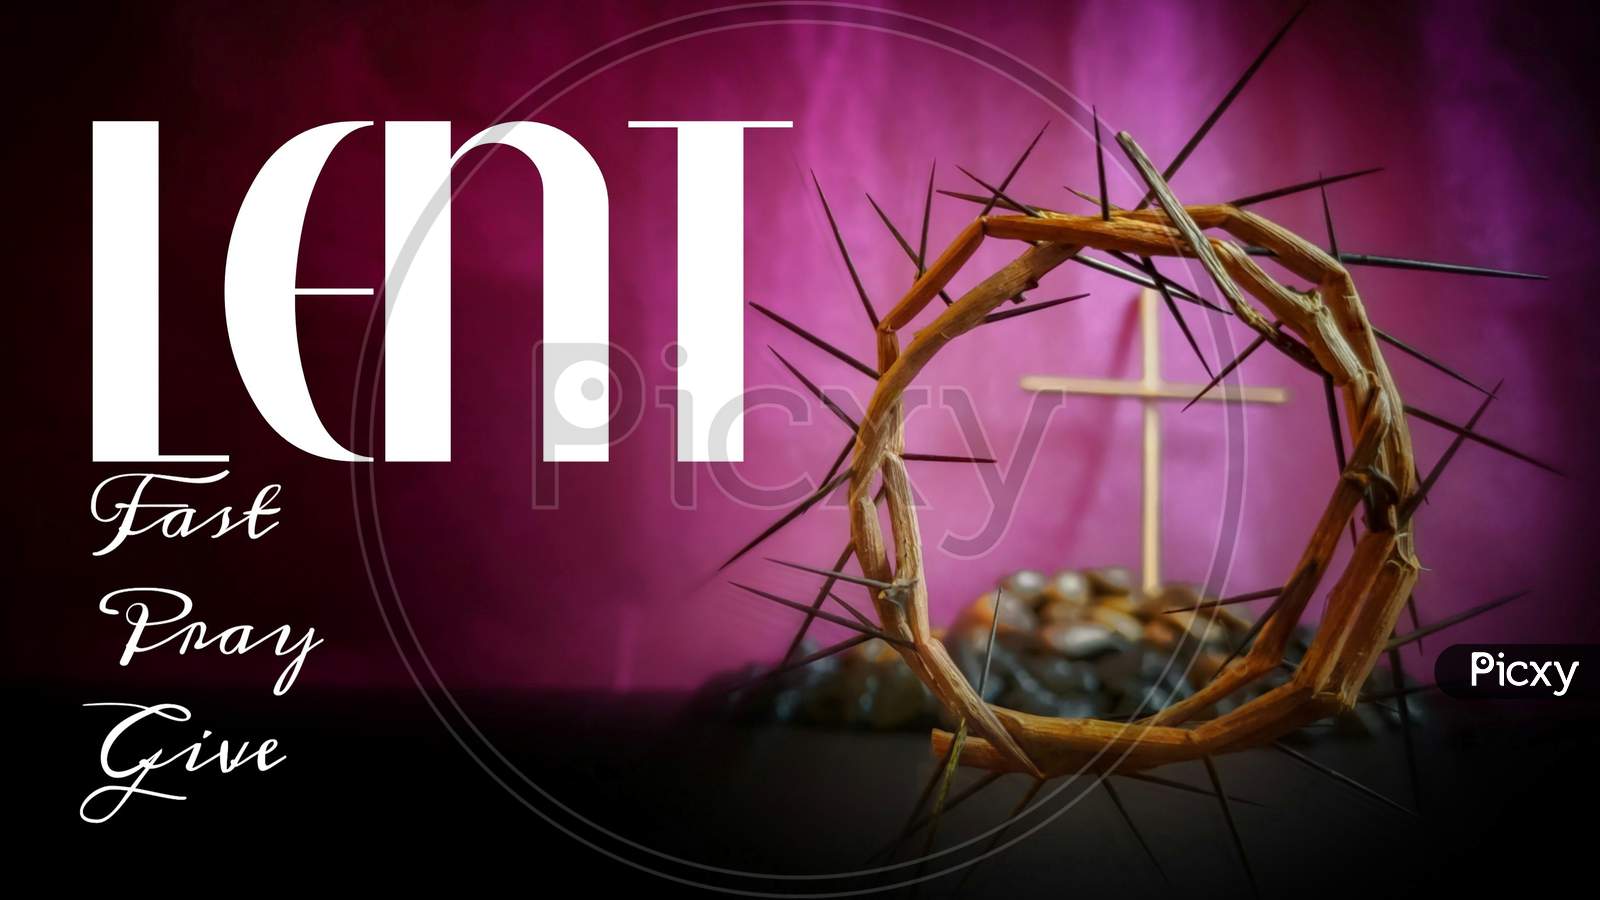 Lent Season,Holy Week and Good Friday concepts